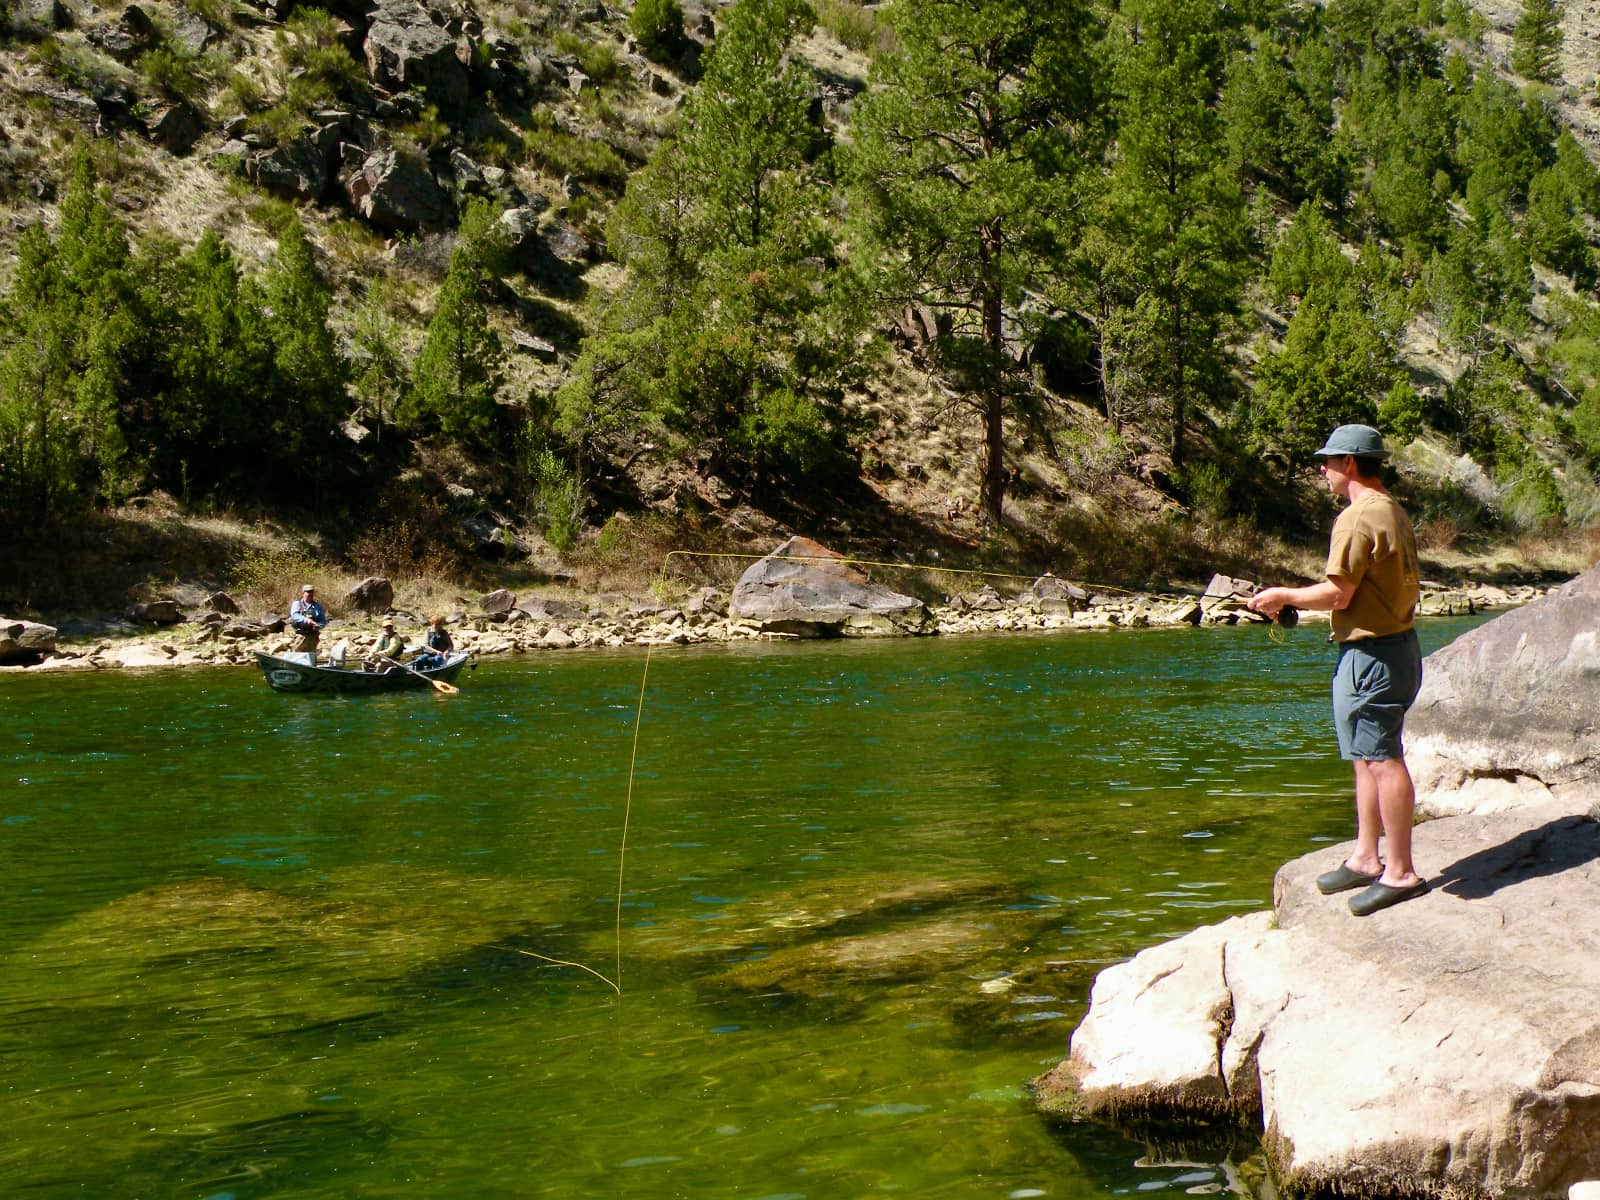 Man in gold shirt fishing on river bank